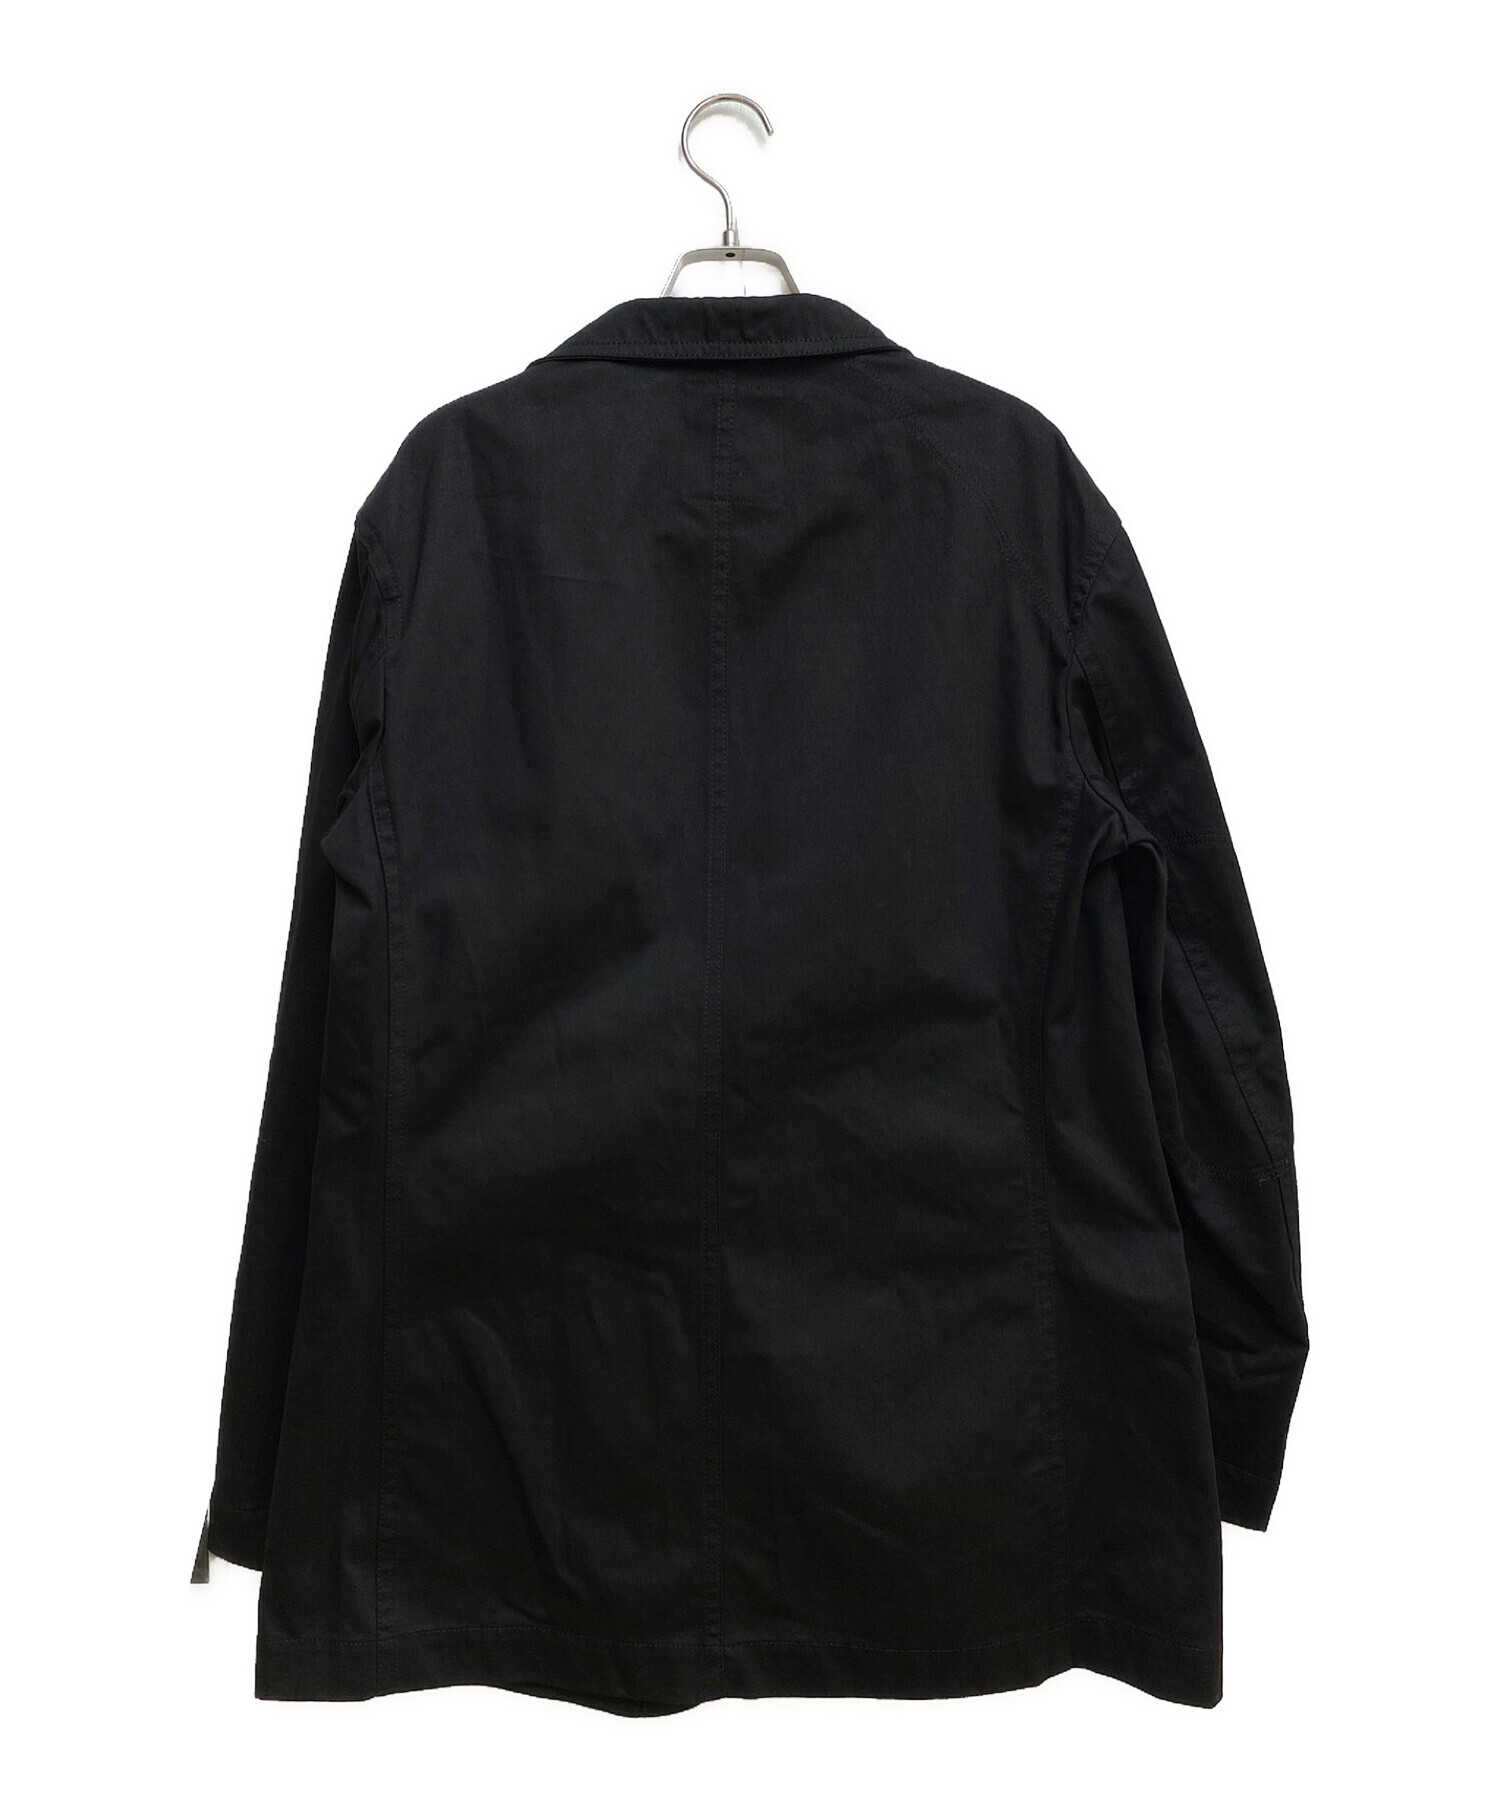 WILDSIDE YOHJI YAMAMOTO (ワイルドサイドヨウジヤマモト) Cotton Chino 2B Tailored Collar  Jacket ブラック サイズ:3